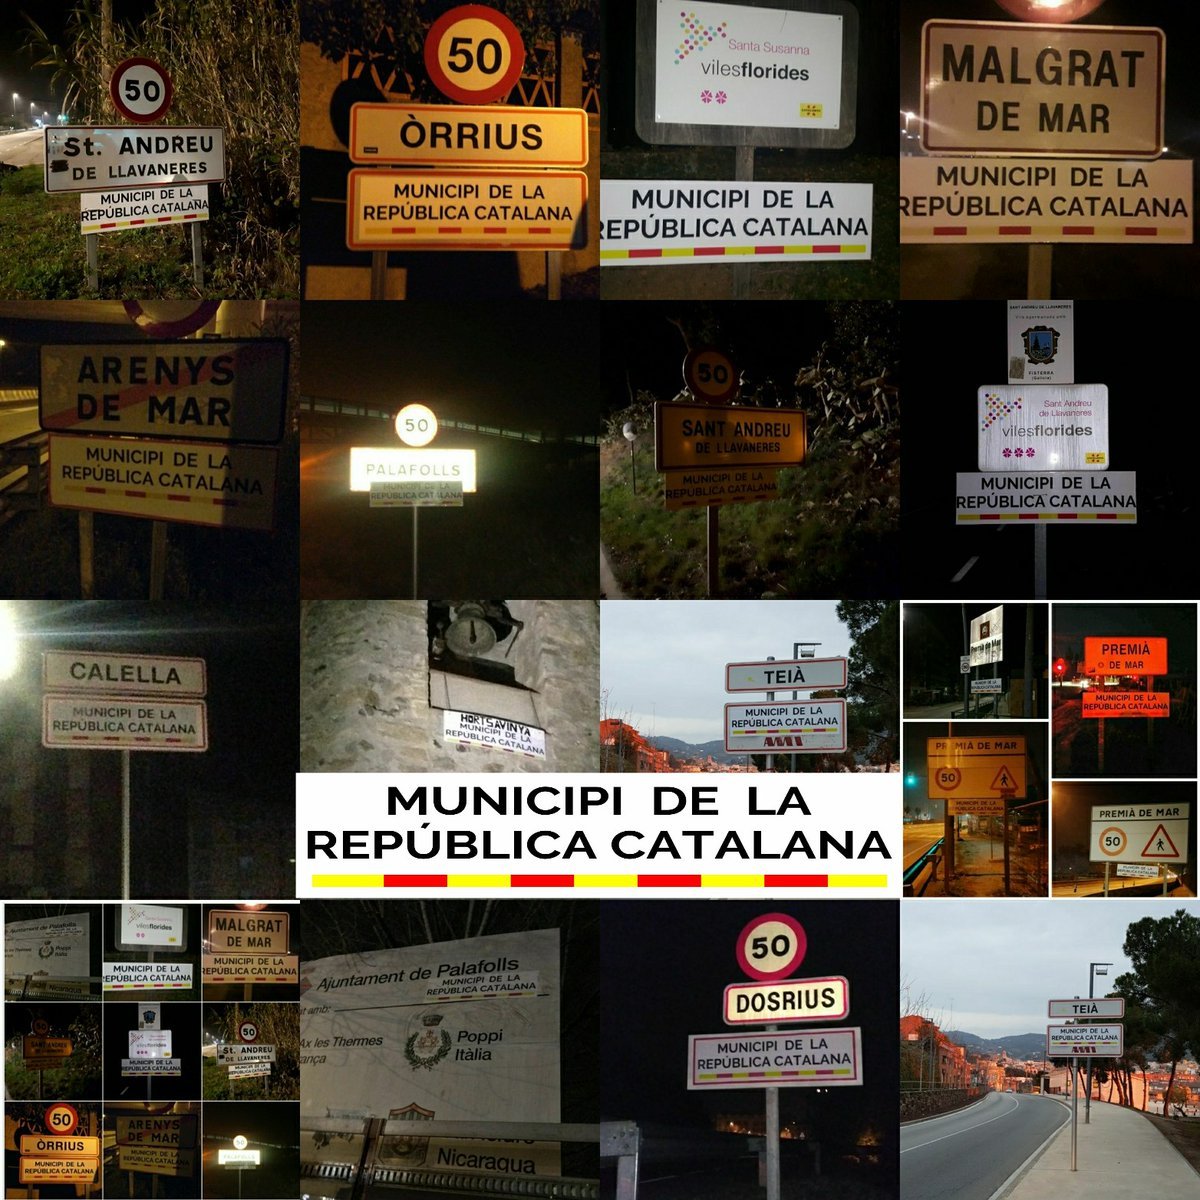 Retiran el cartel de "Municipio de la República" de Calella